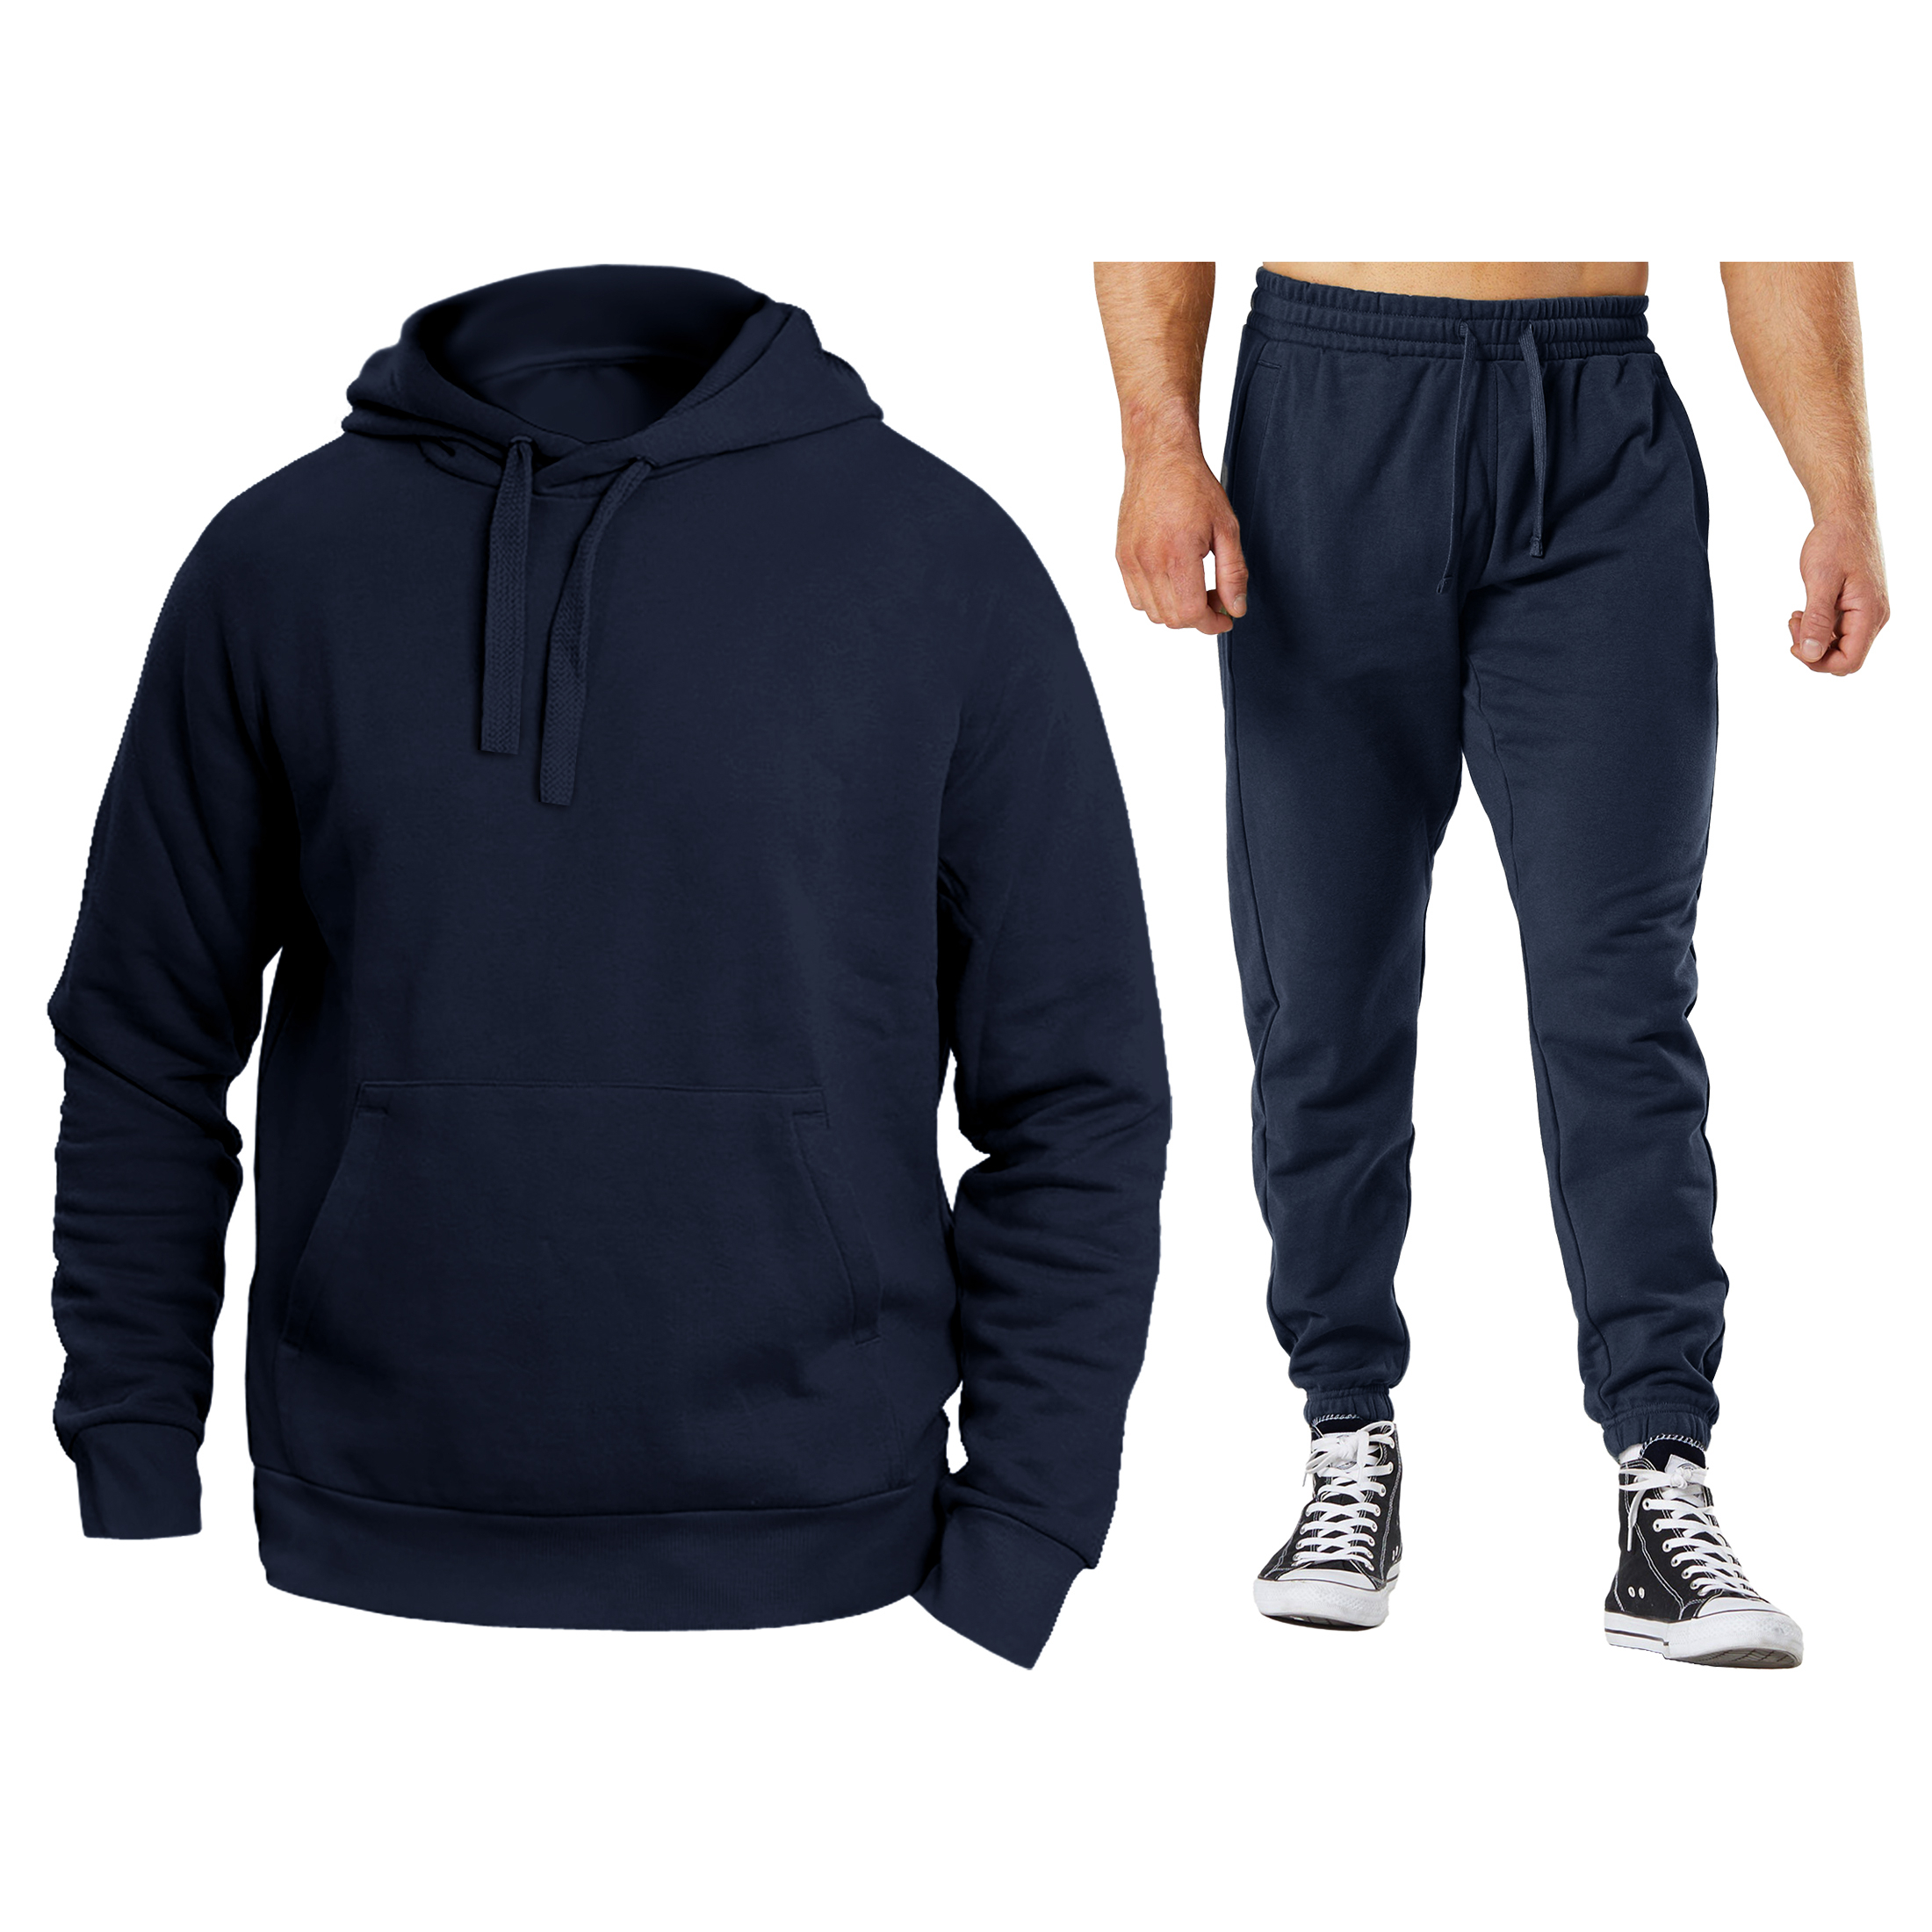 Men's Athletic Warm Jogging Pullover Active Sweatsuit - Black, Large